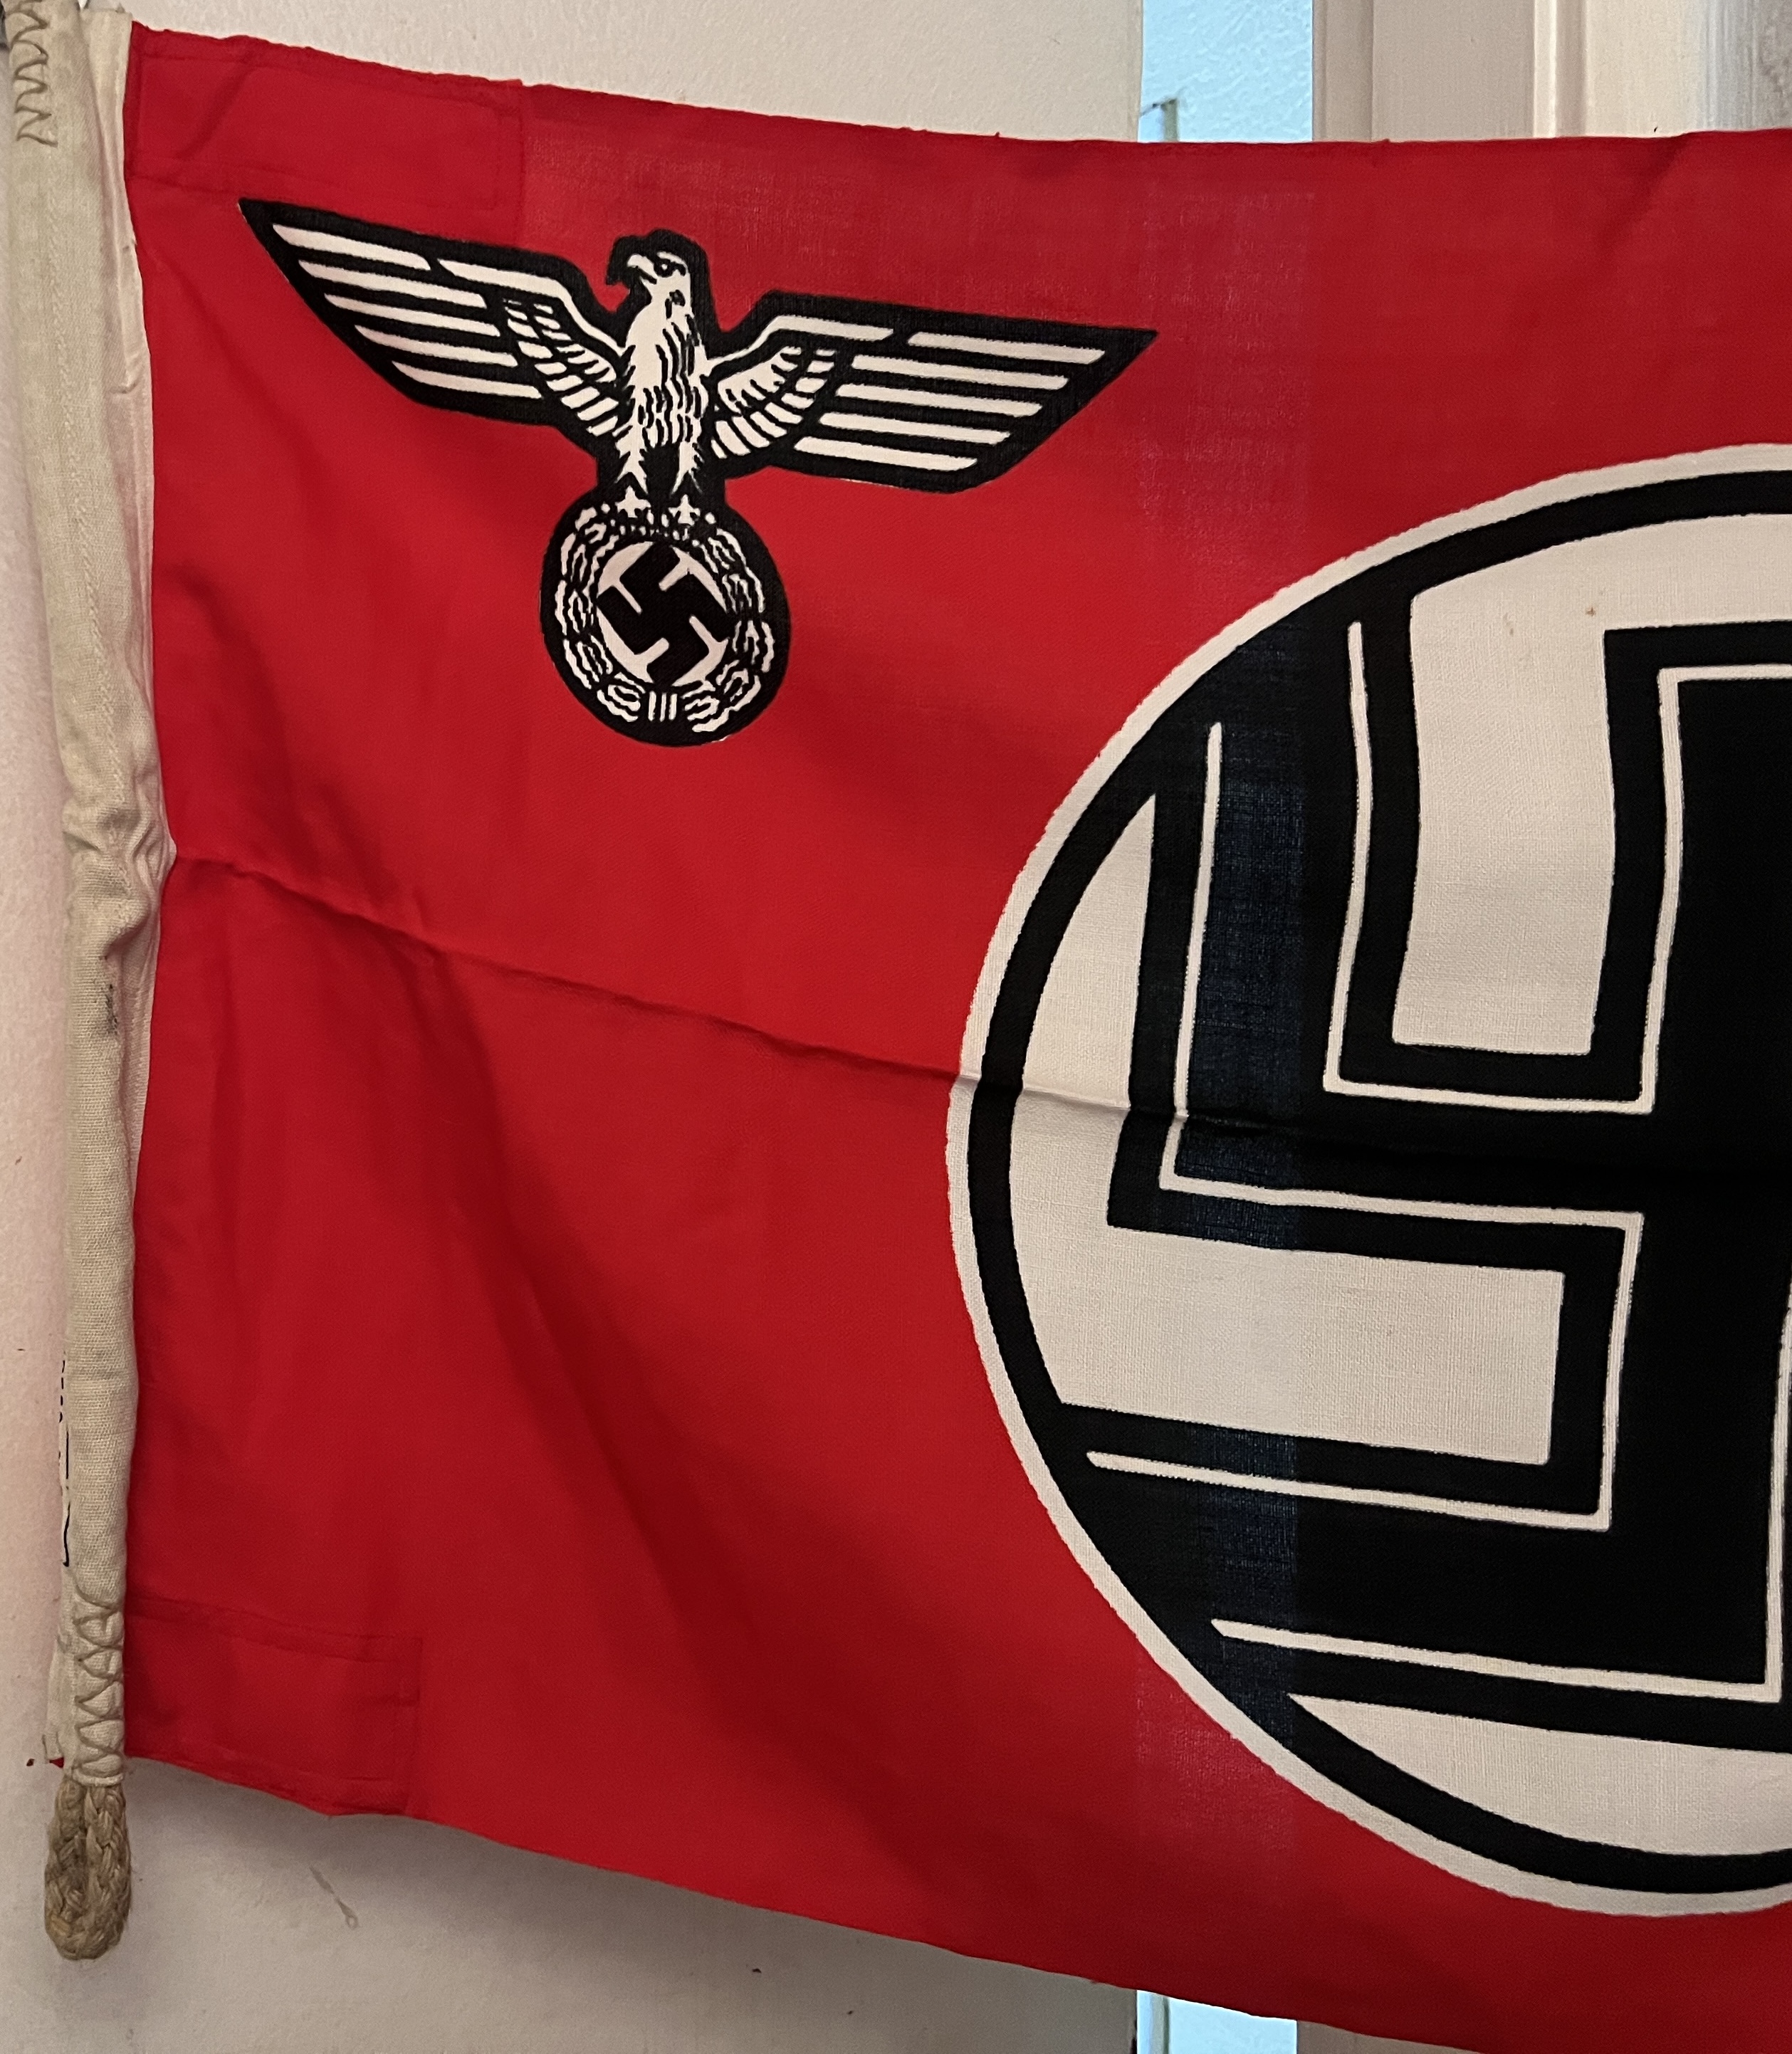 Nazi State Service flag, eagle and two swastikas